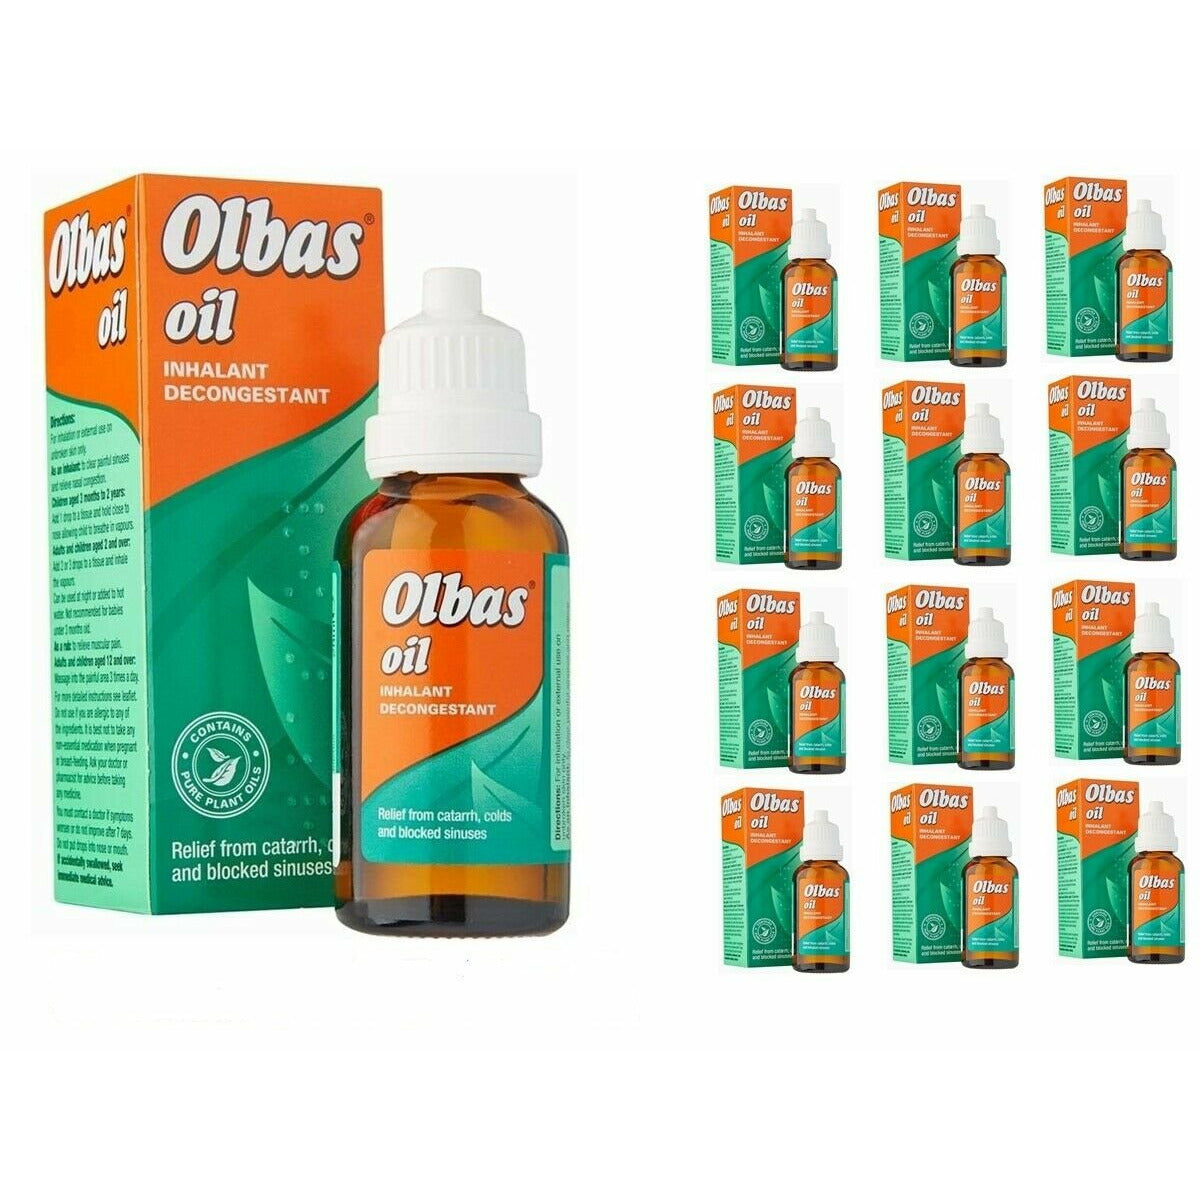 Olbas Oil Inhalant Decongestant 30ml - 12 Pack